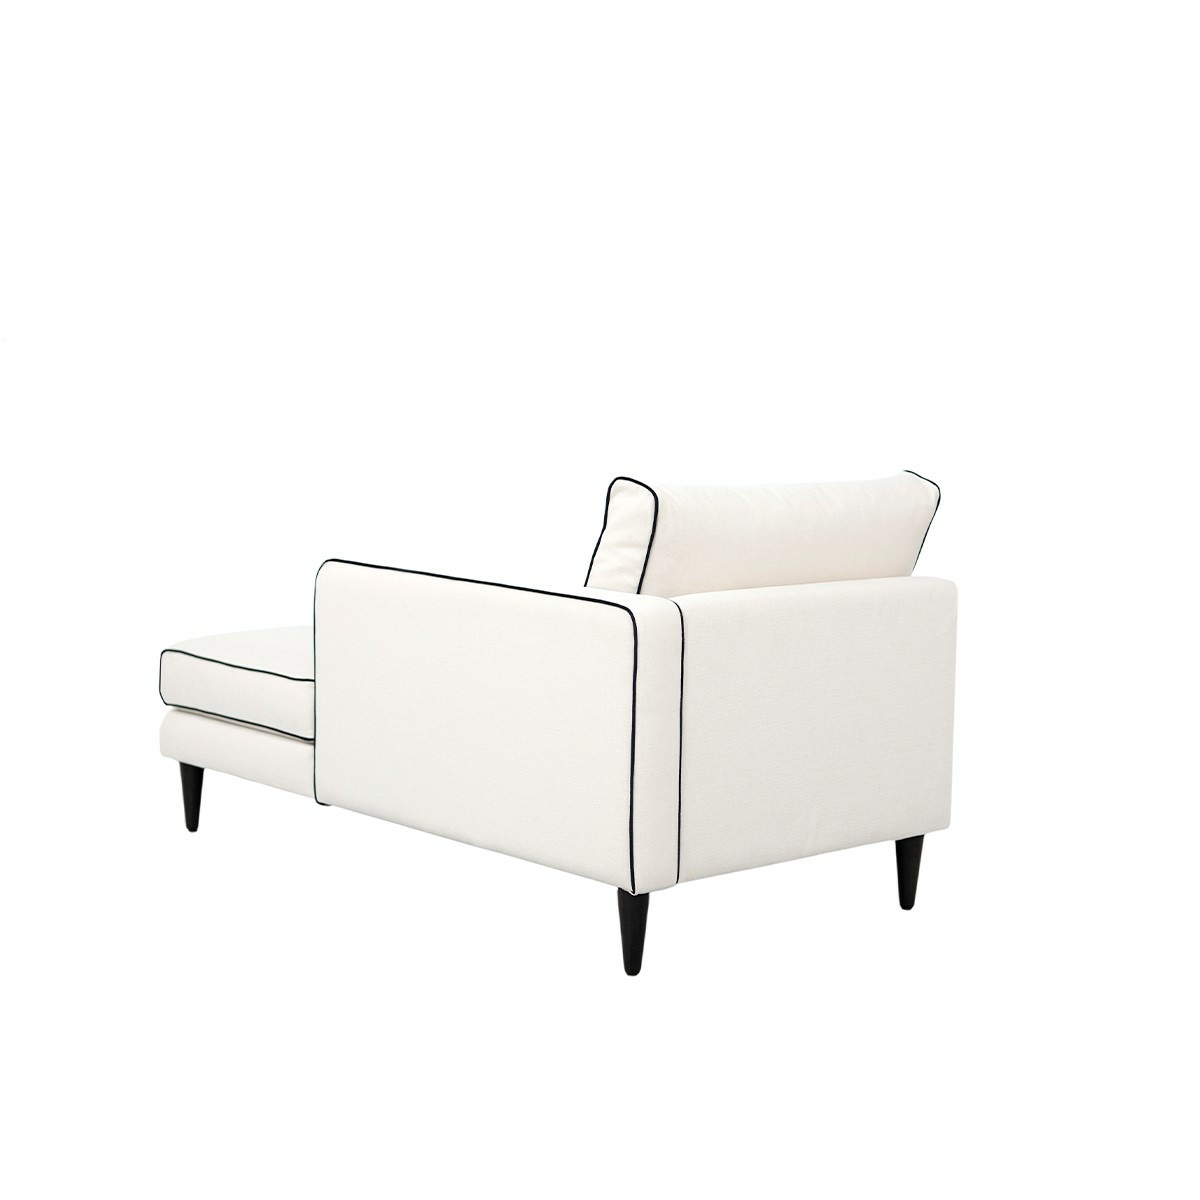 Noa sofa - Right armrest, Different Sizes - Cotton - image 5